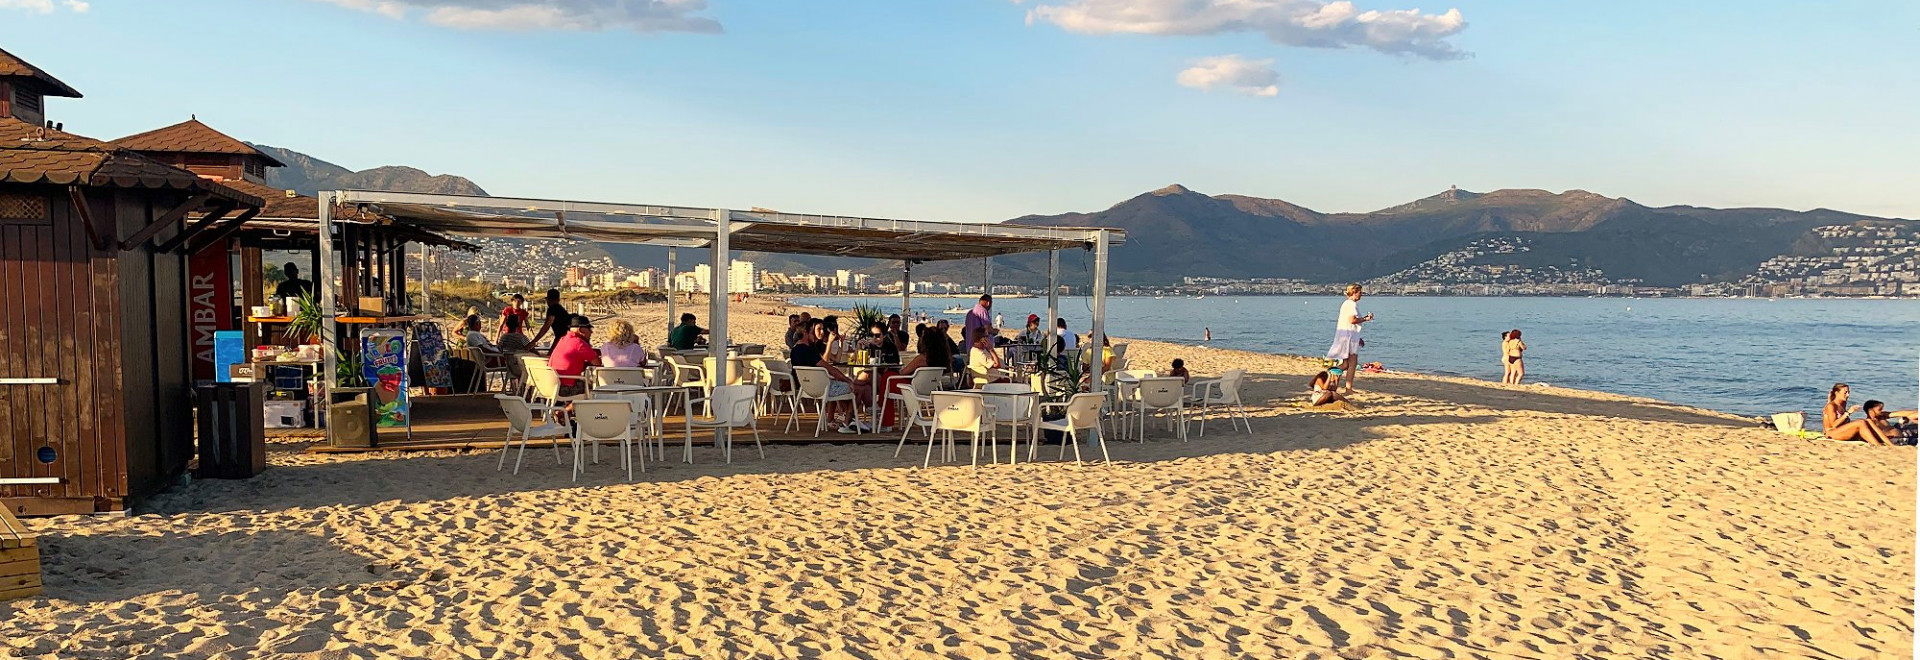 Restaurant on the beach in Spain